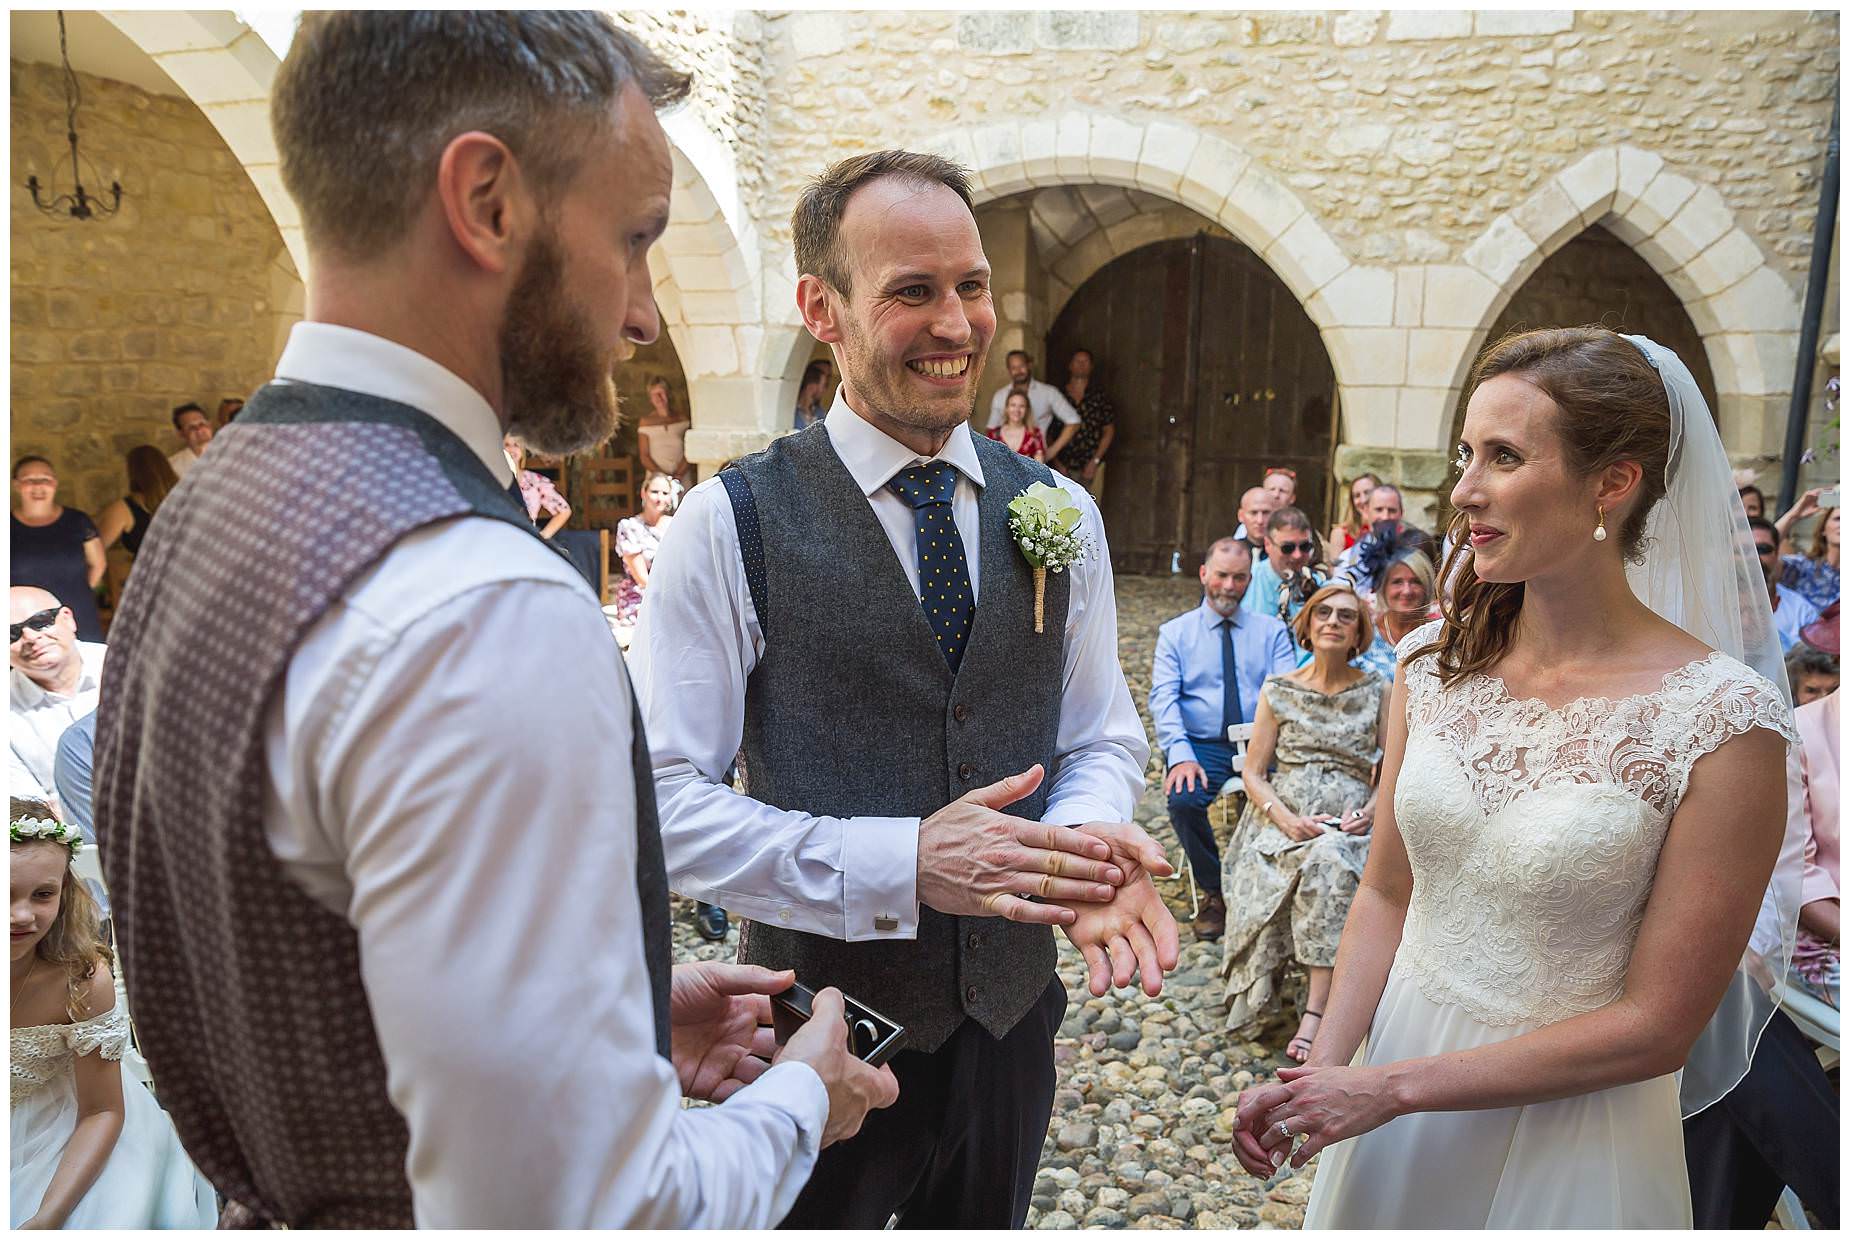 exchange of rings at chateau brametourte wedding